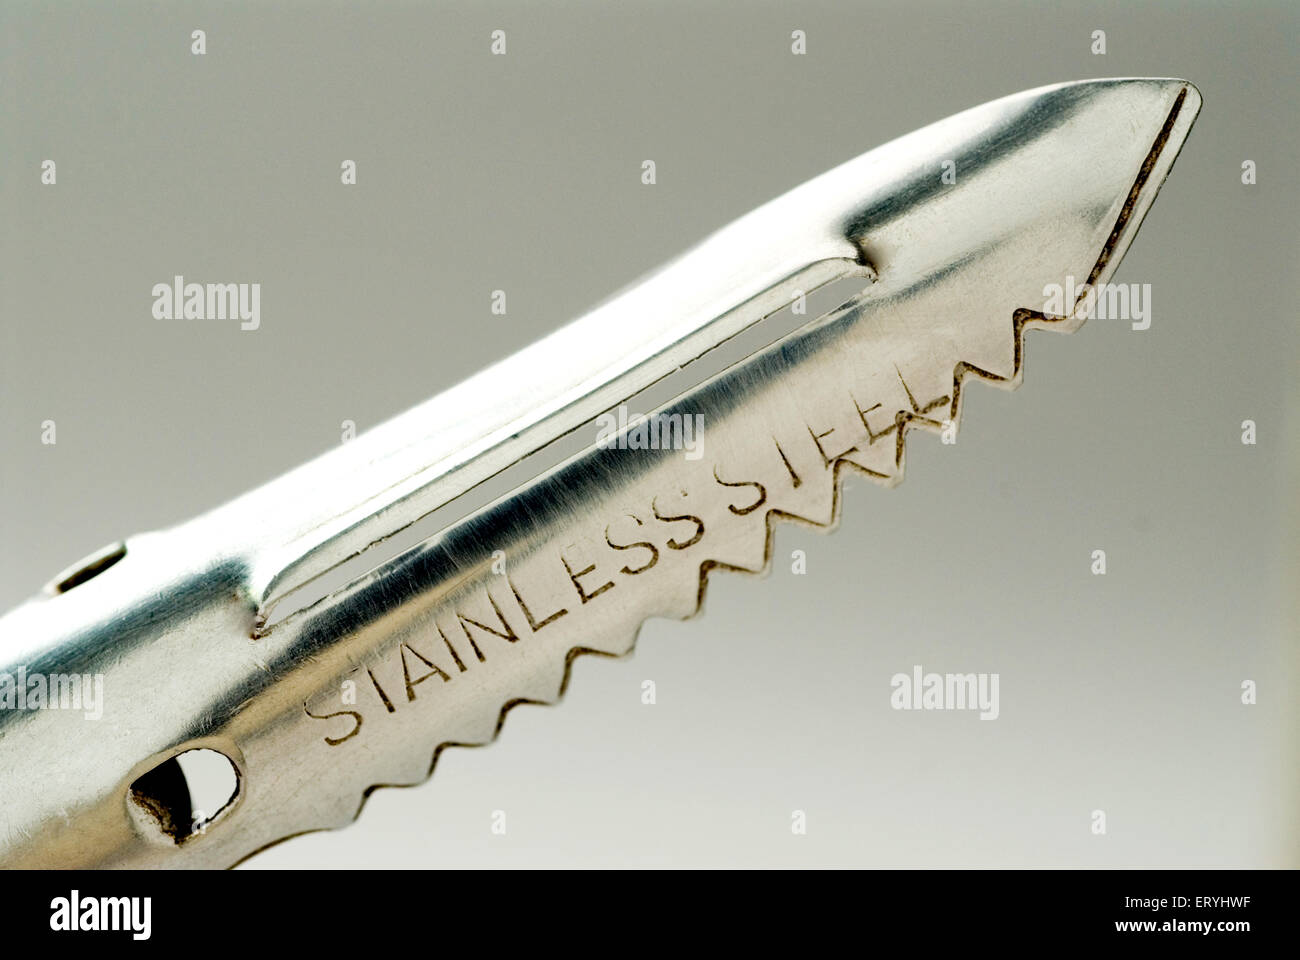 Stainless steel kitchen utensil peeler on gray background Stock Photo